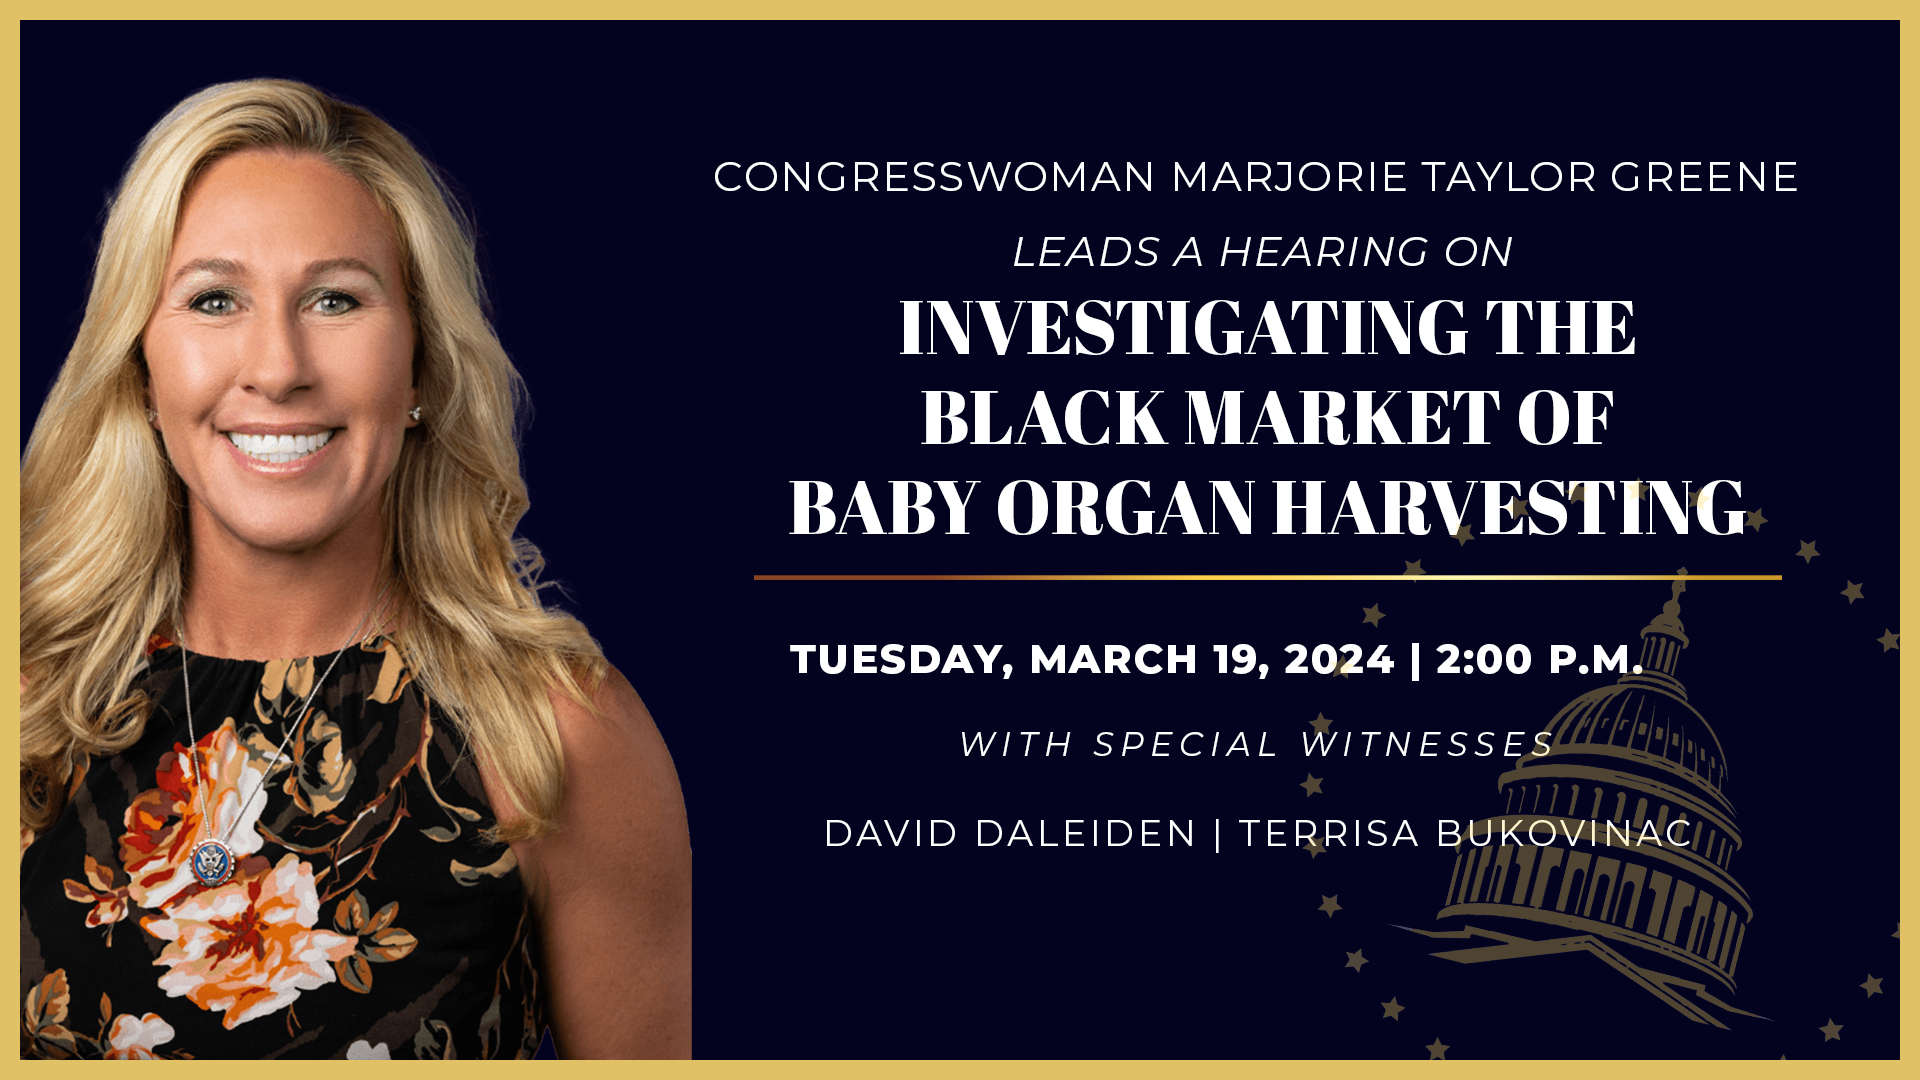 Hearing on the Black Market of Baby Organ Harvesting